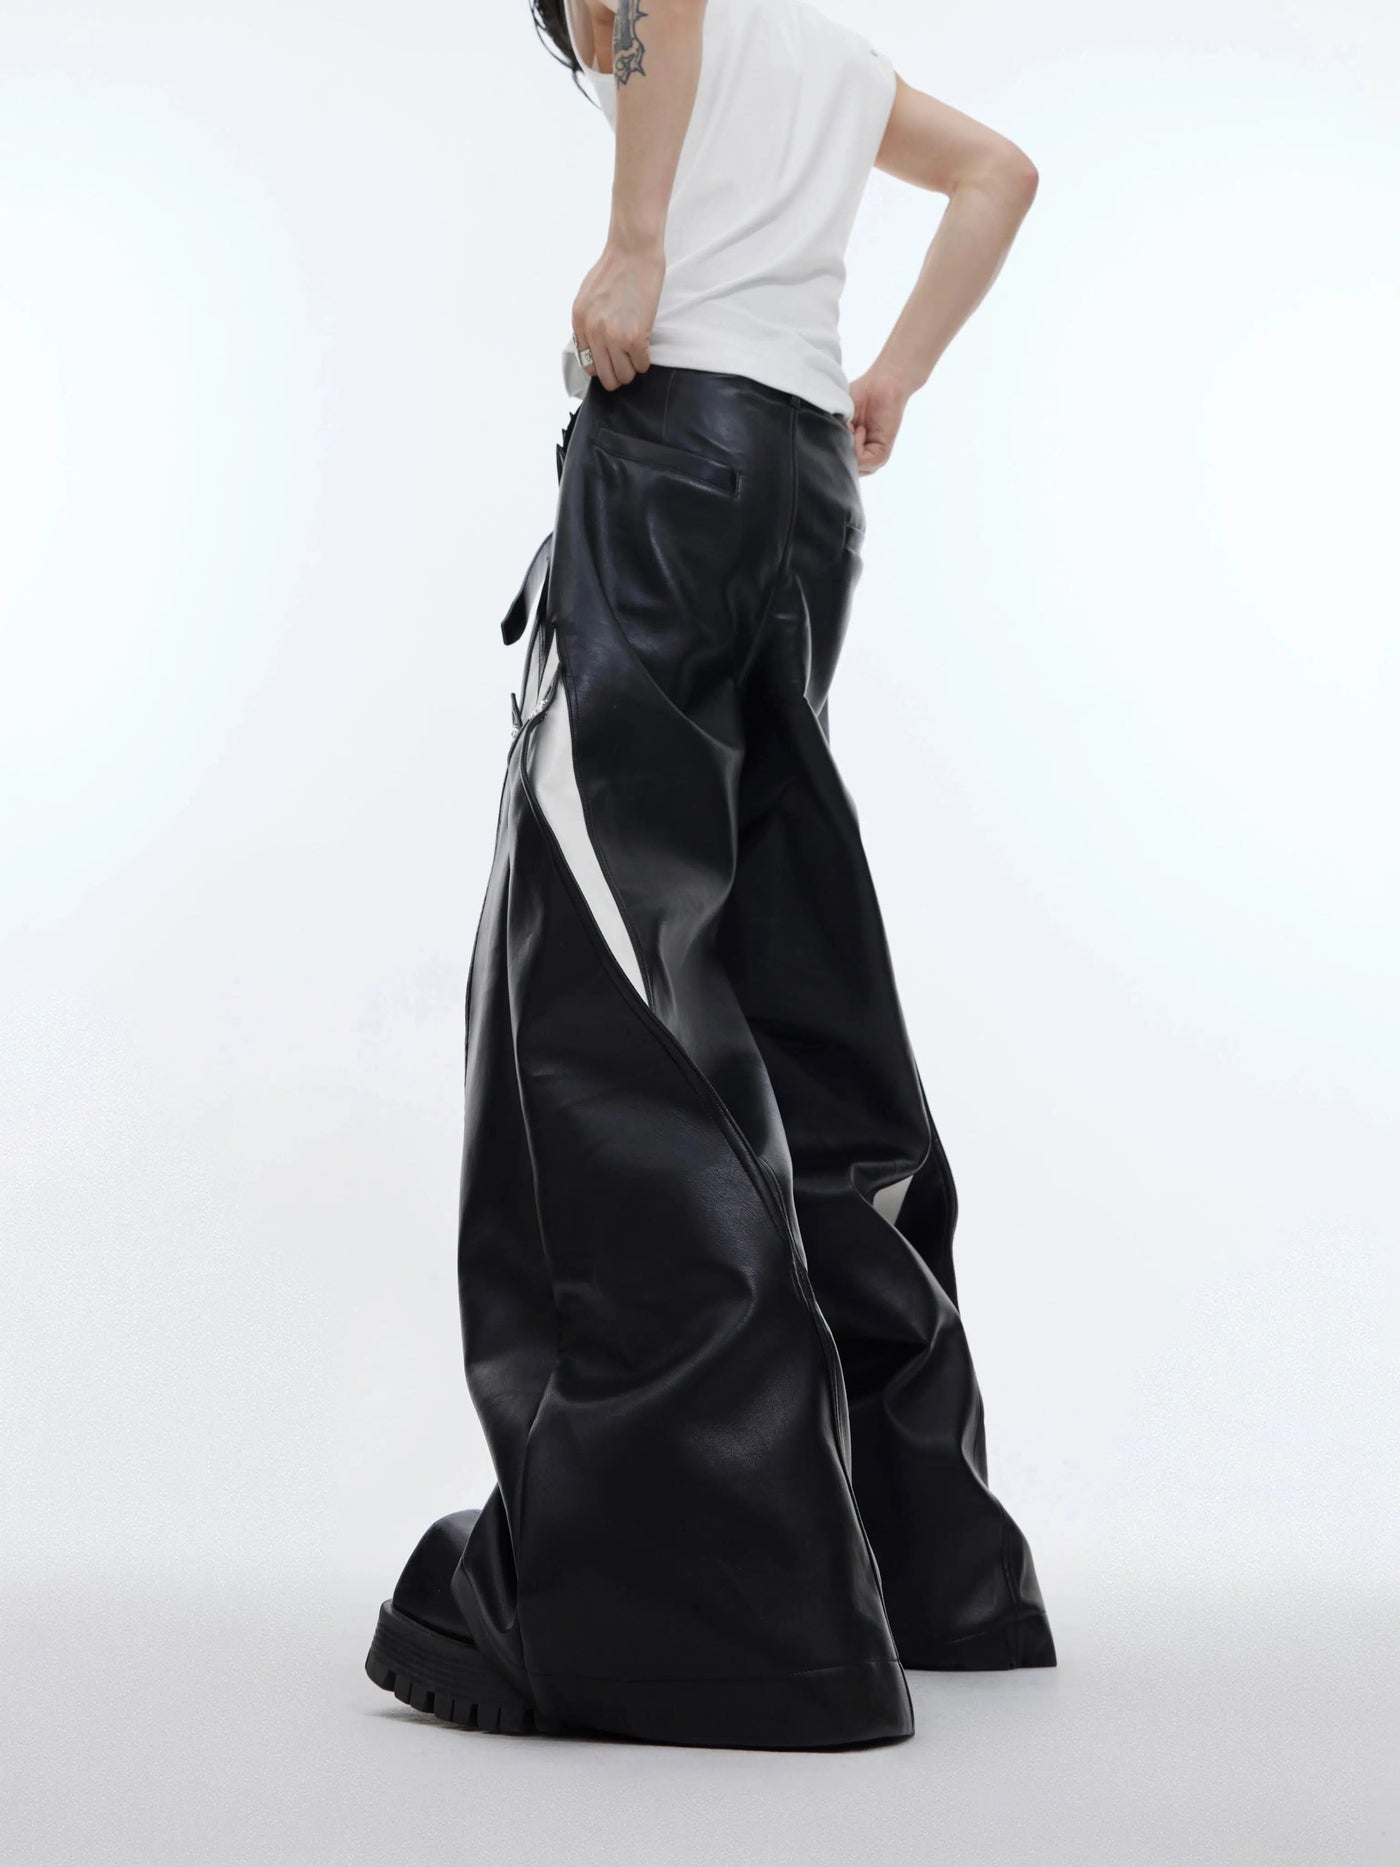 Splits Contrast PU Leather Pants Korean Street Fashion Pants By Argue Culture Shop Online at OH Vault